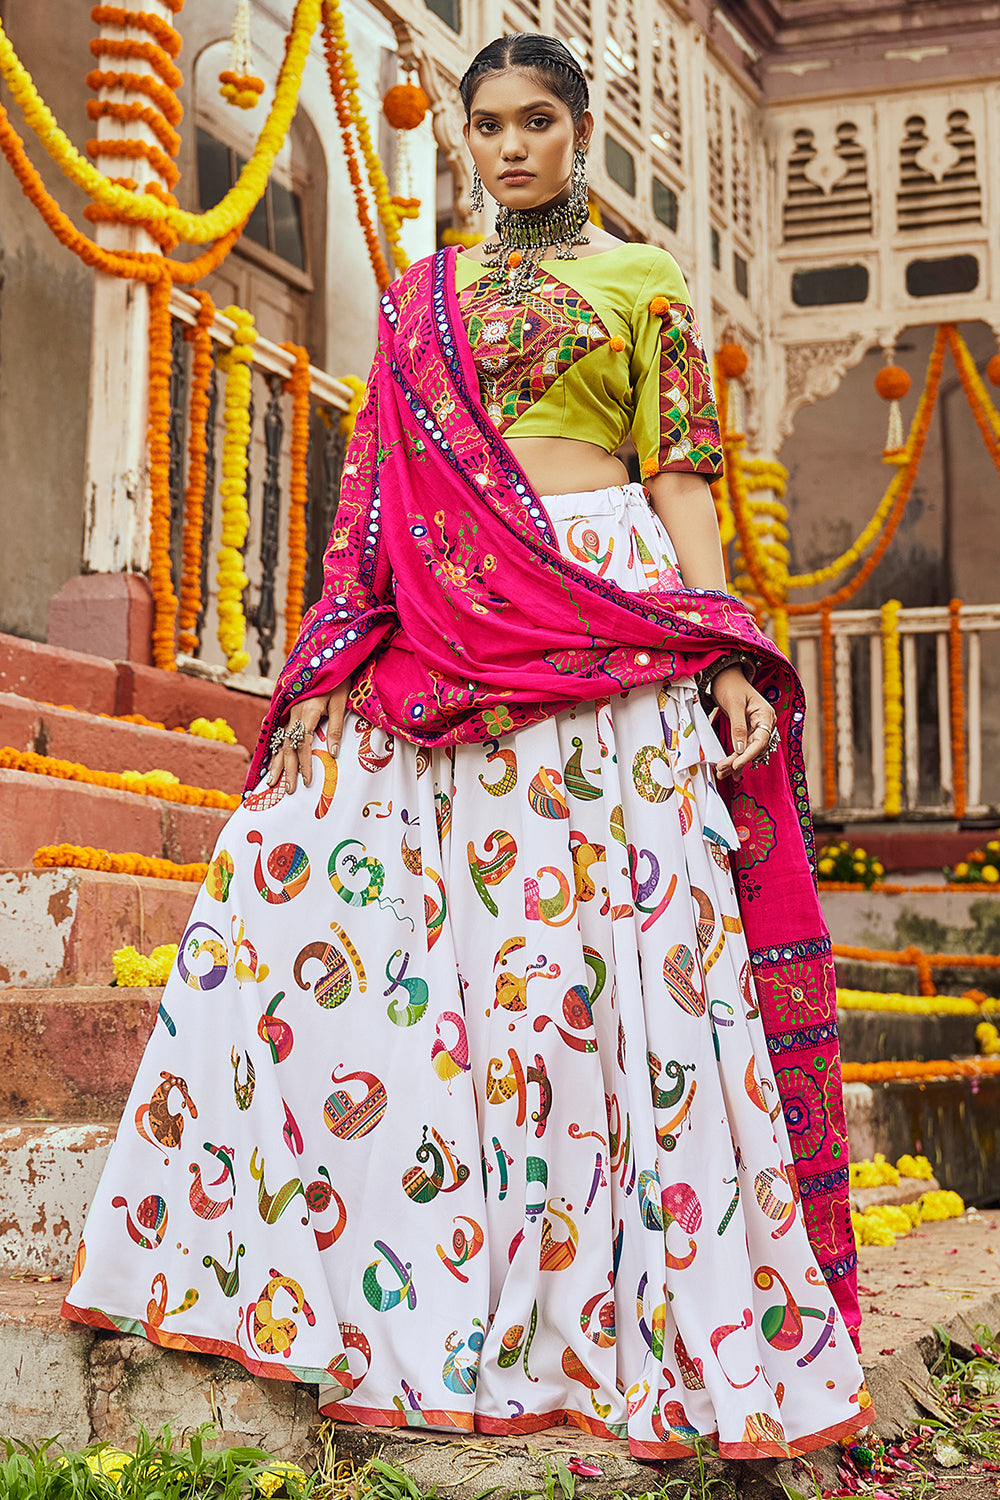 Mira Rajput White Lehenga Saree From Sanah Kapur Wedding Costs Rs 1.68  Lakh, Mesmerising... Isnt it - See Pics